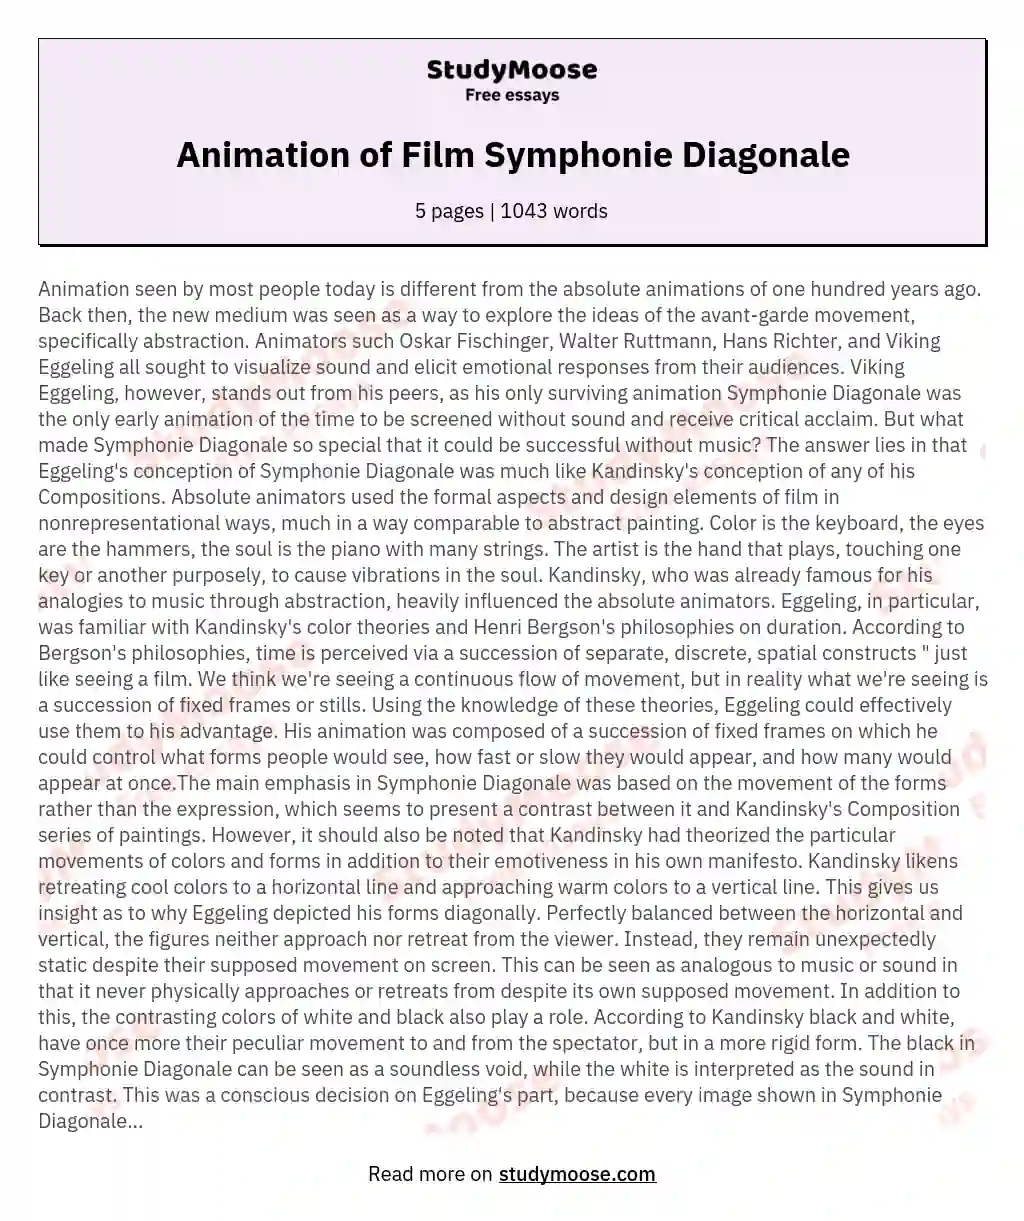 Animation of Film Symphonie Diagonale essay